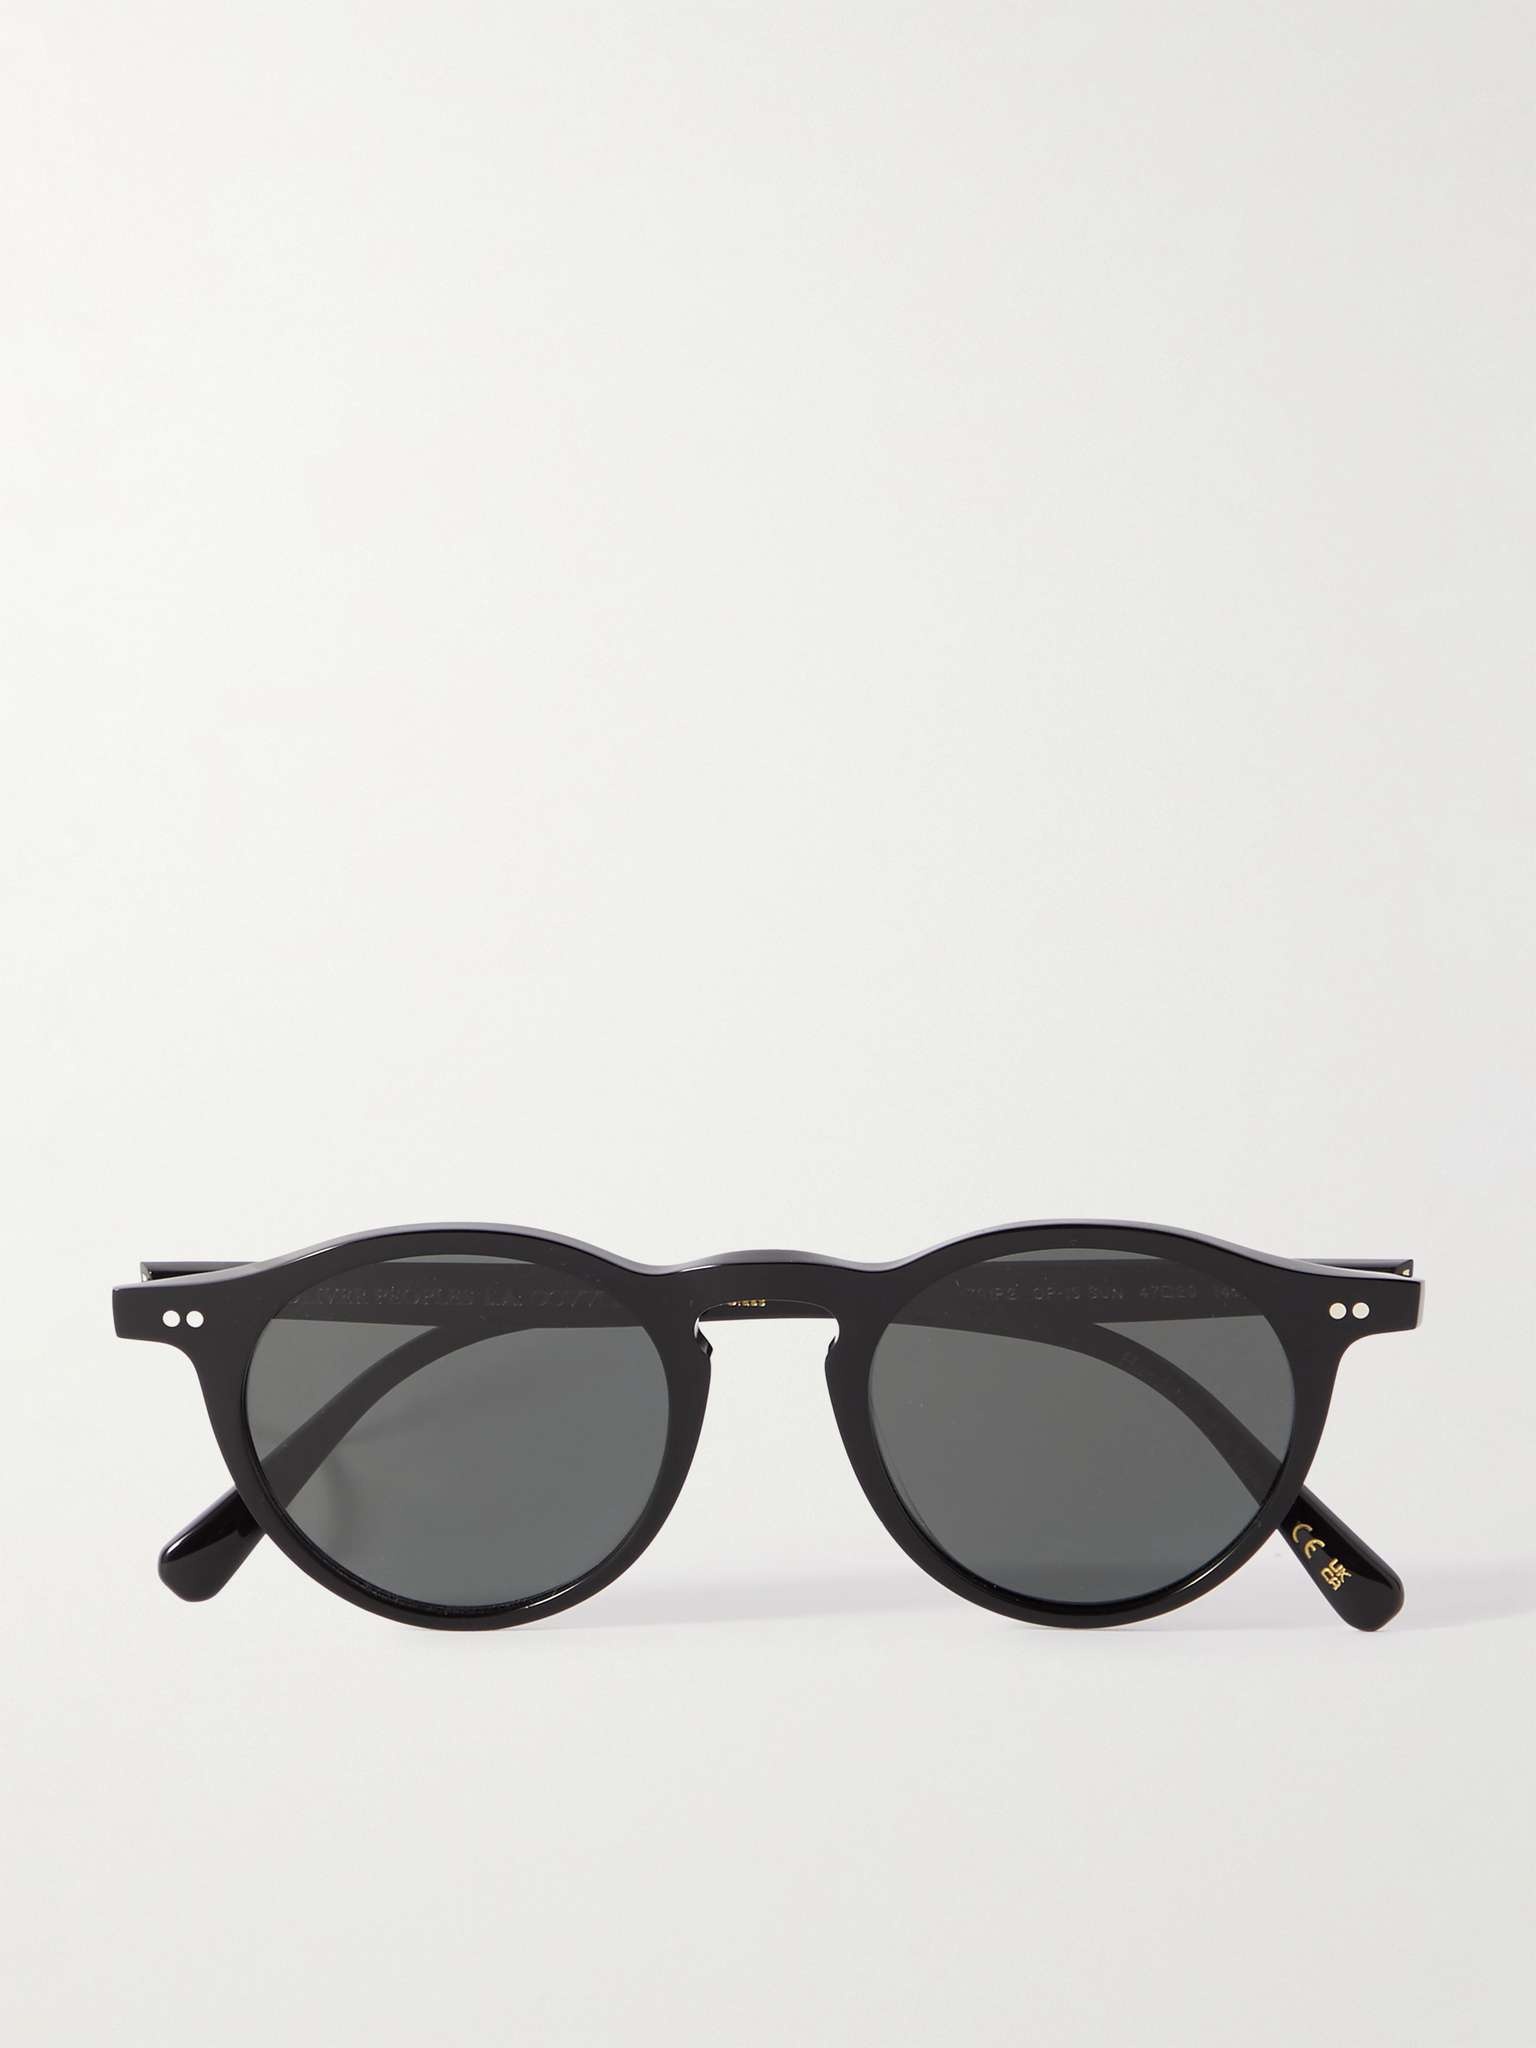 OP-13 Round-Frame Tortoiseshell Acetate Sunglasses - 1